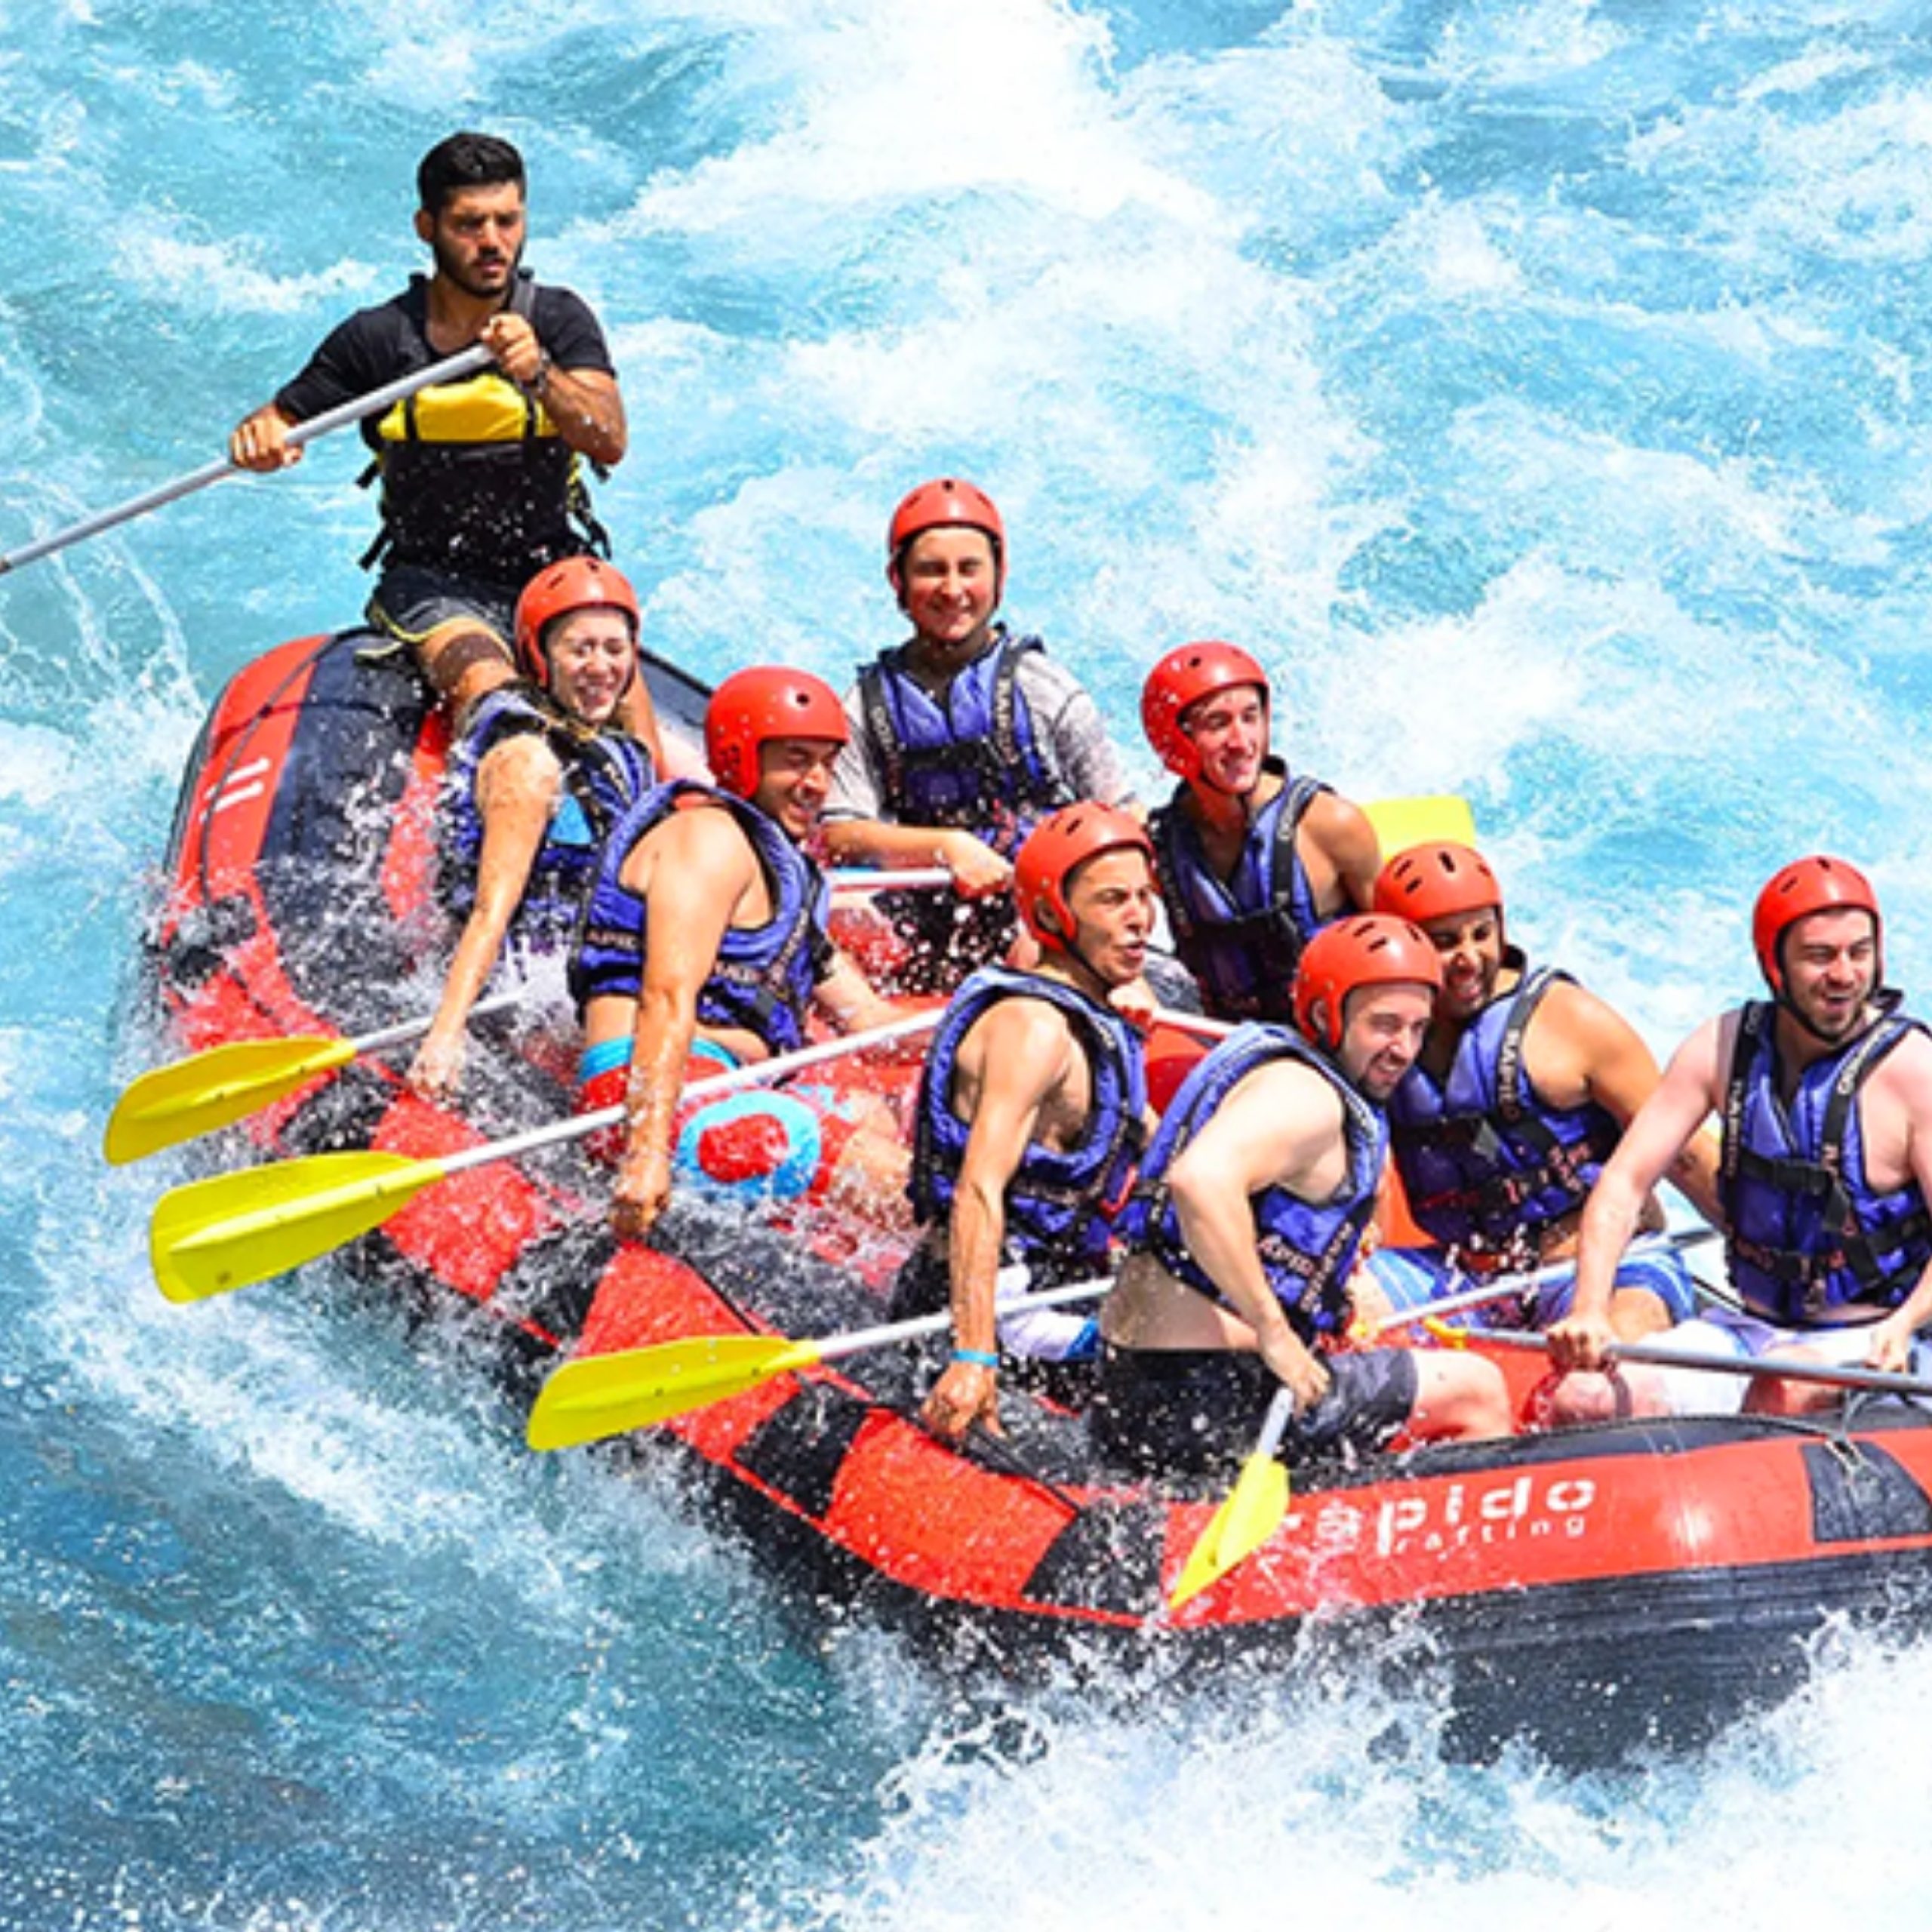 Antalya: Köprülü Canyon Rafting Adventure with Transfer